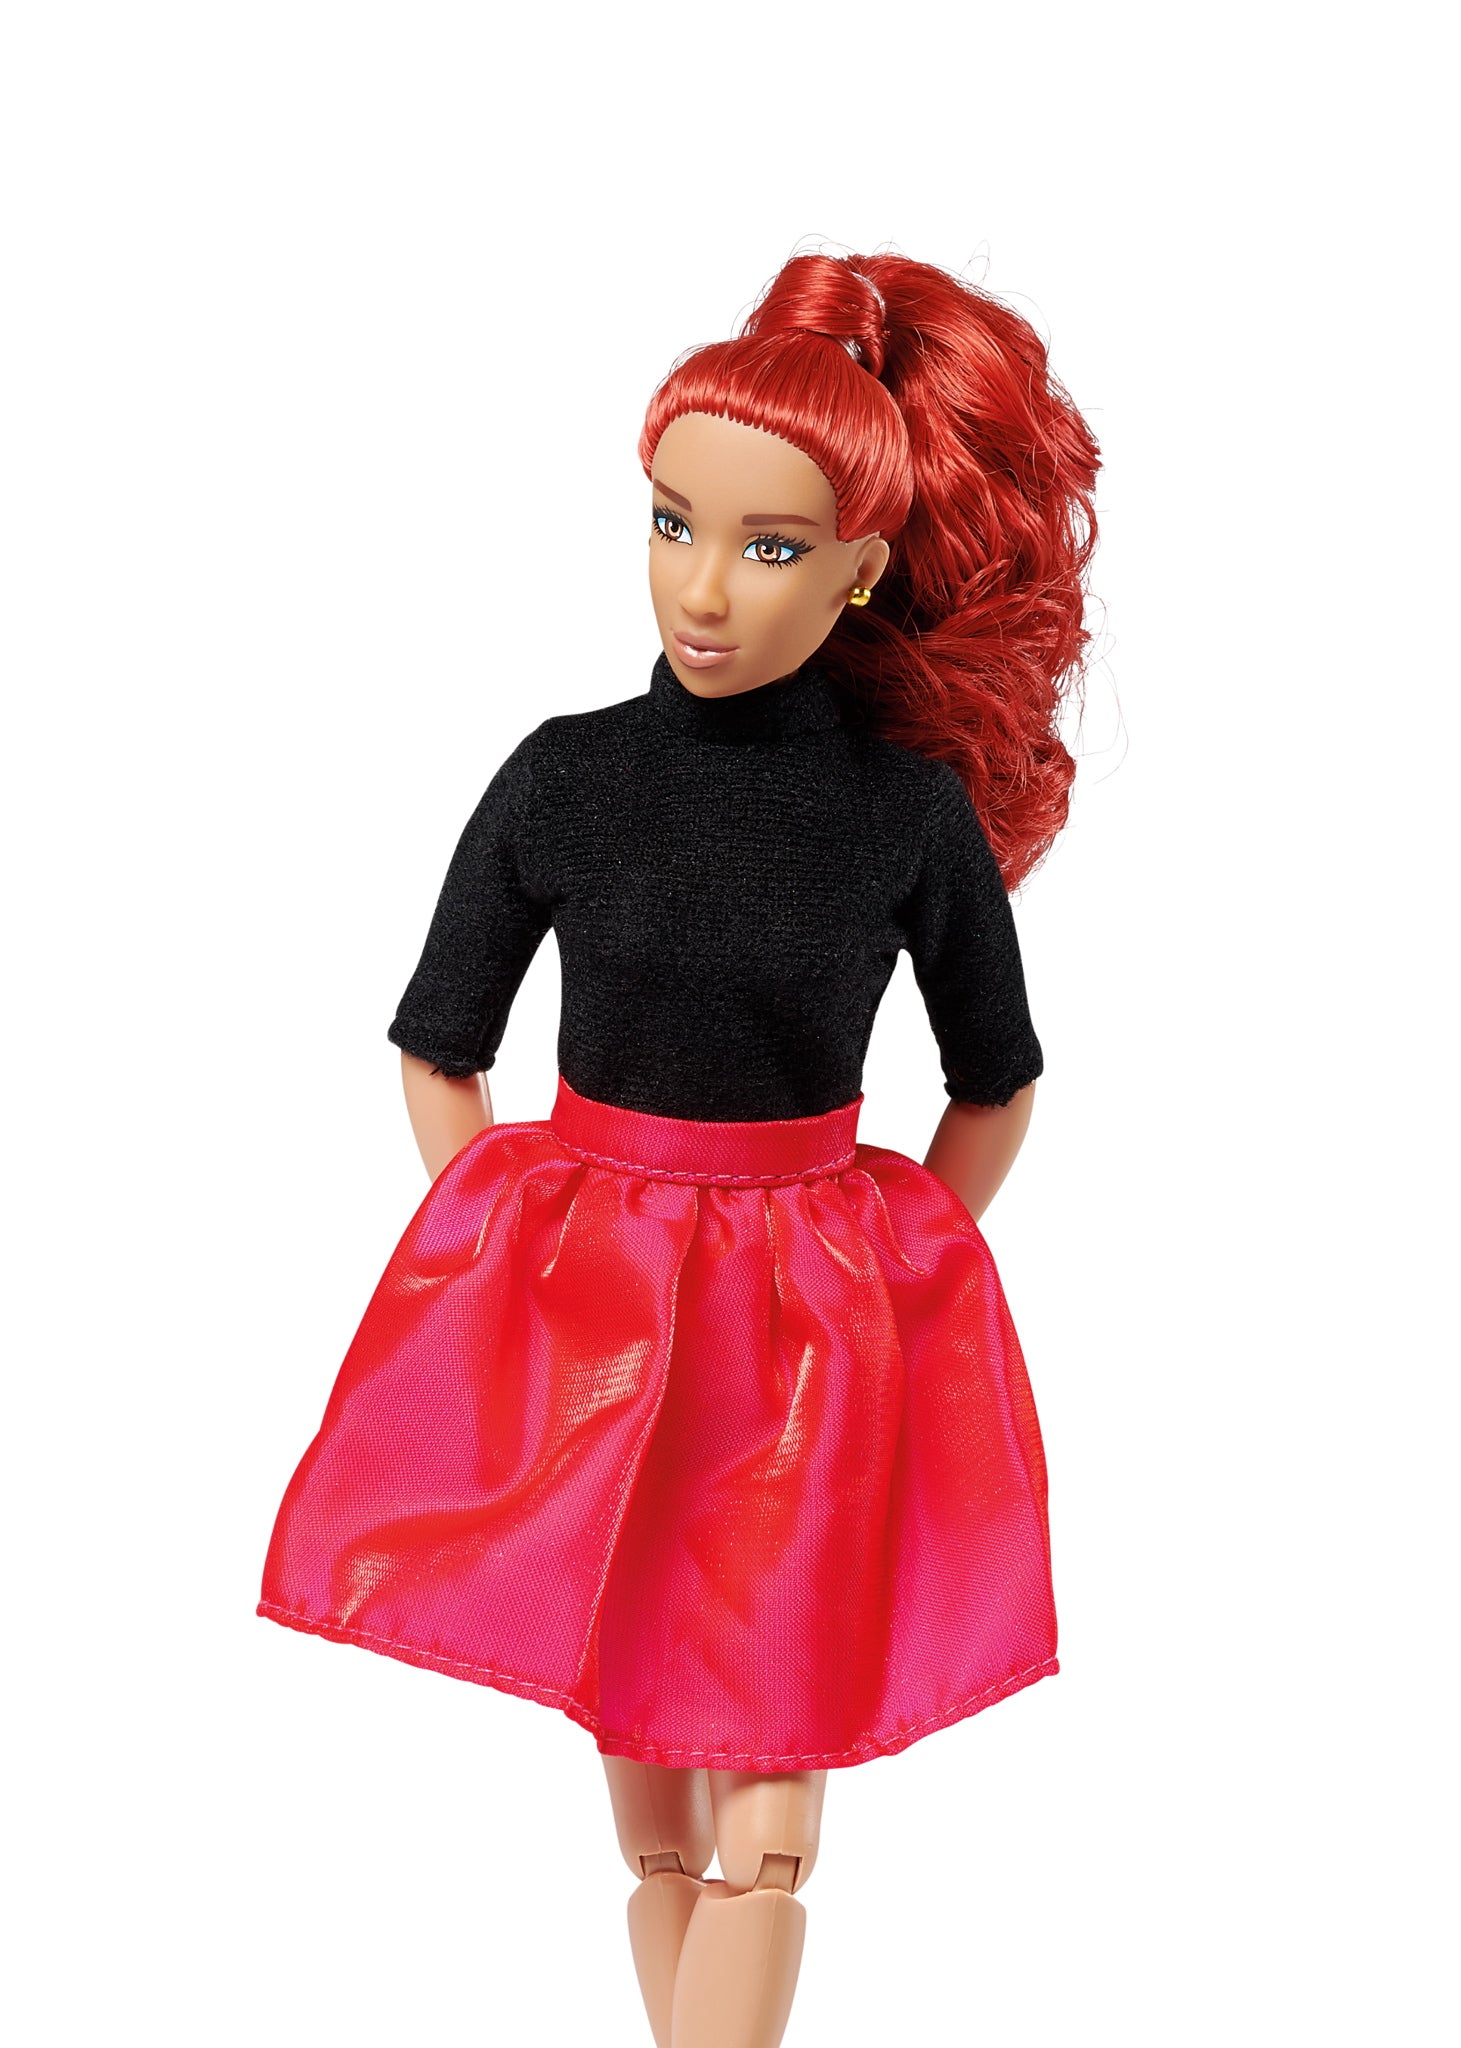 red hair doll